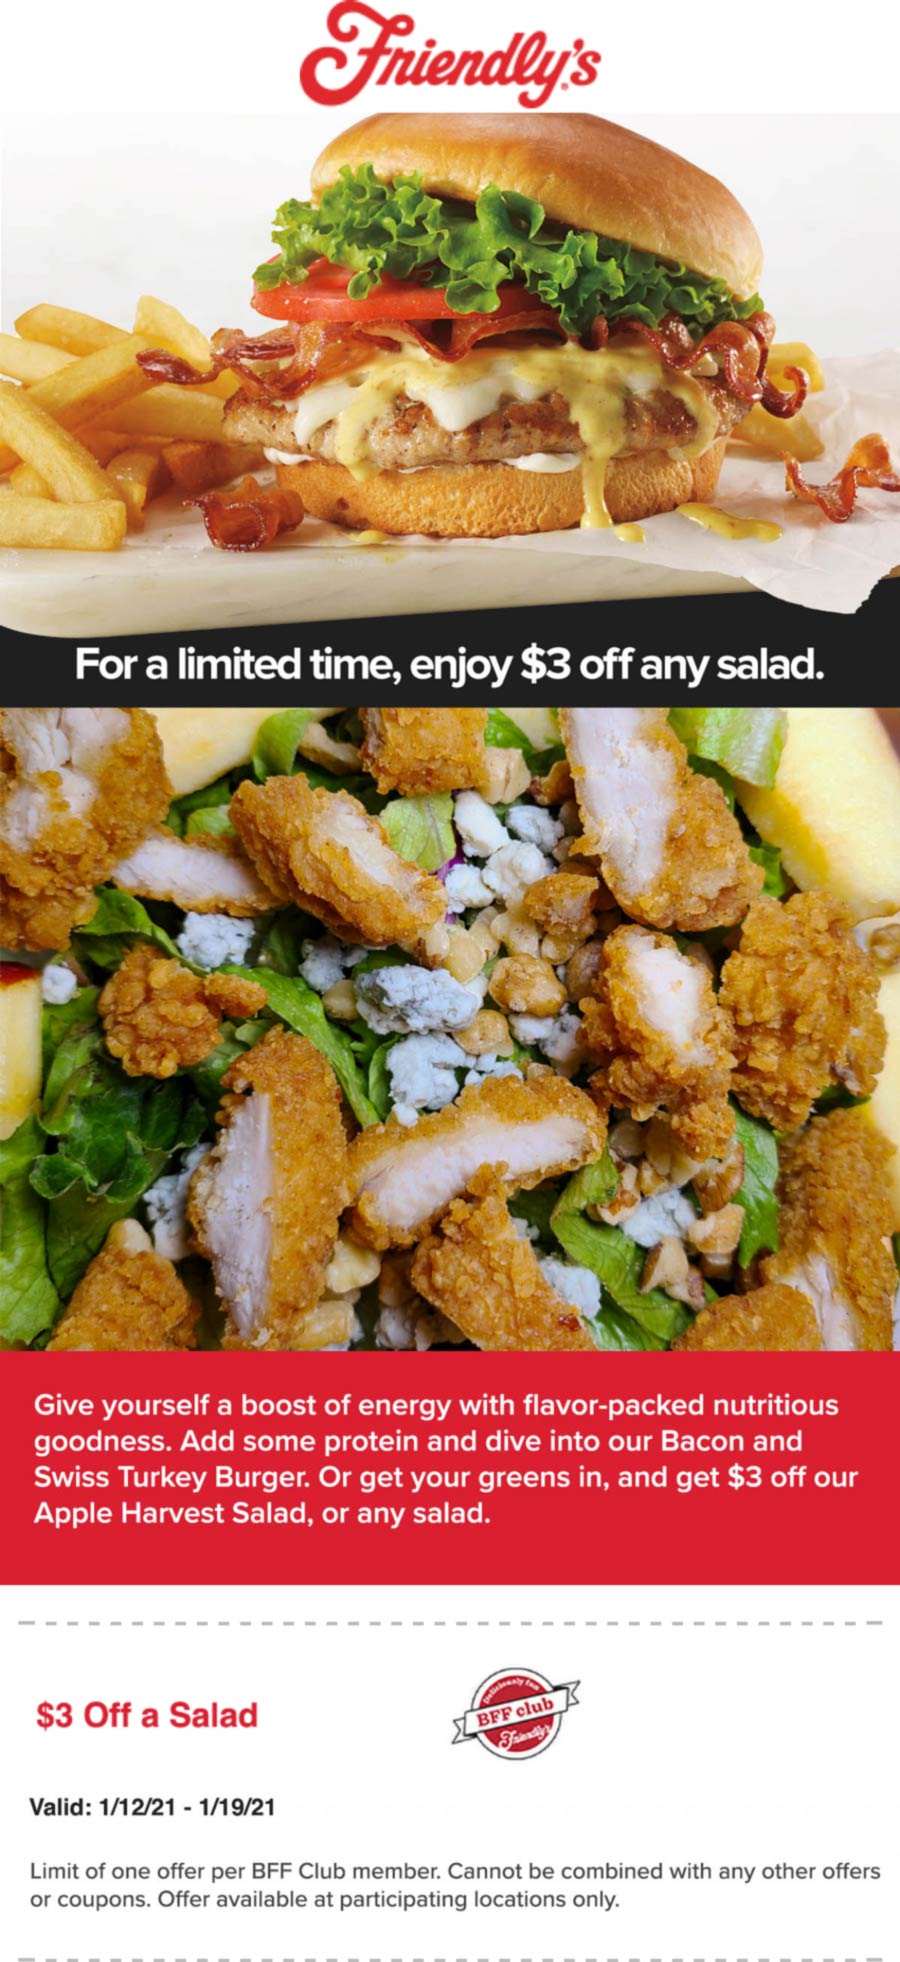 Friendlys restaurants Coupon  $3 off any salad at Friendlys restaurants #friendlys 